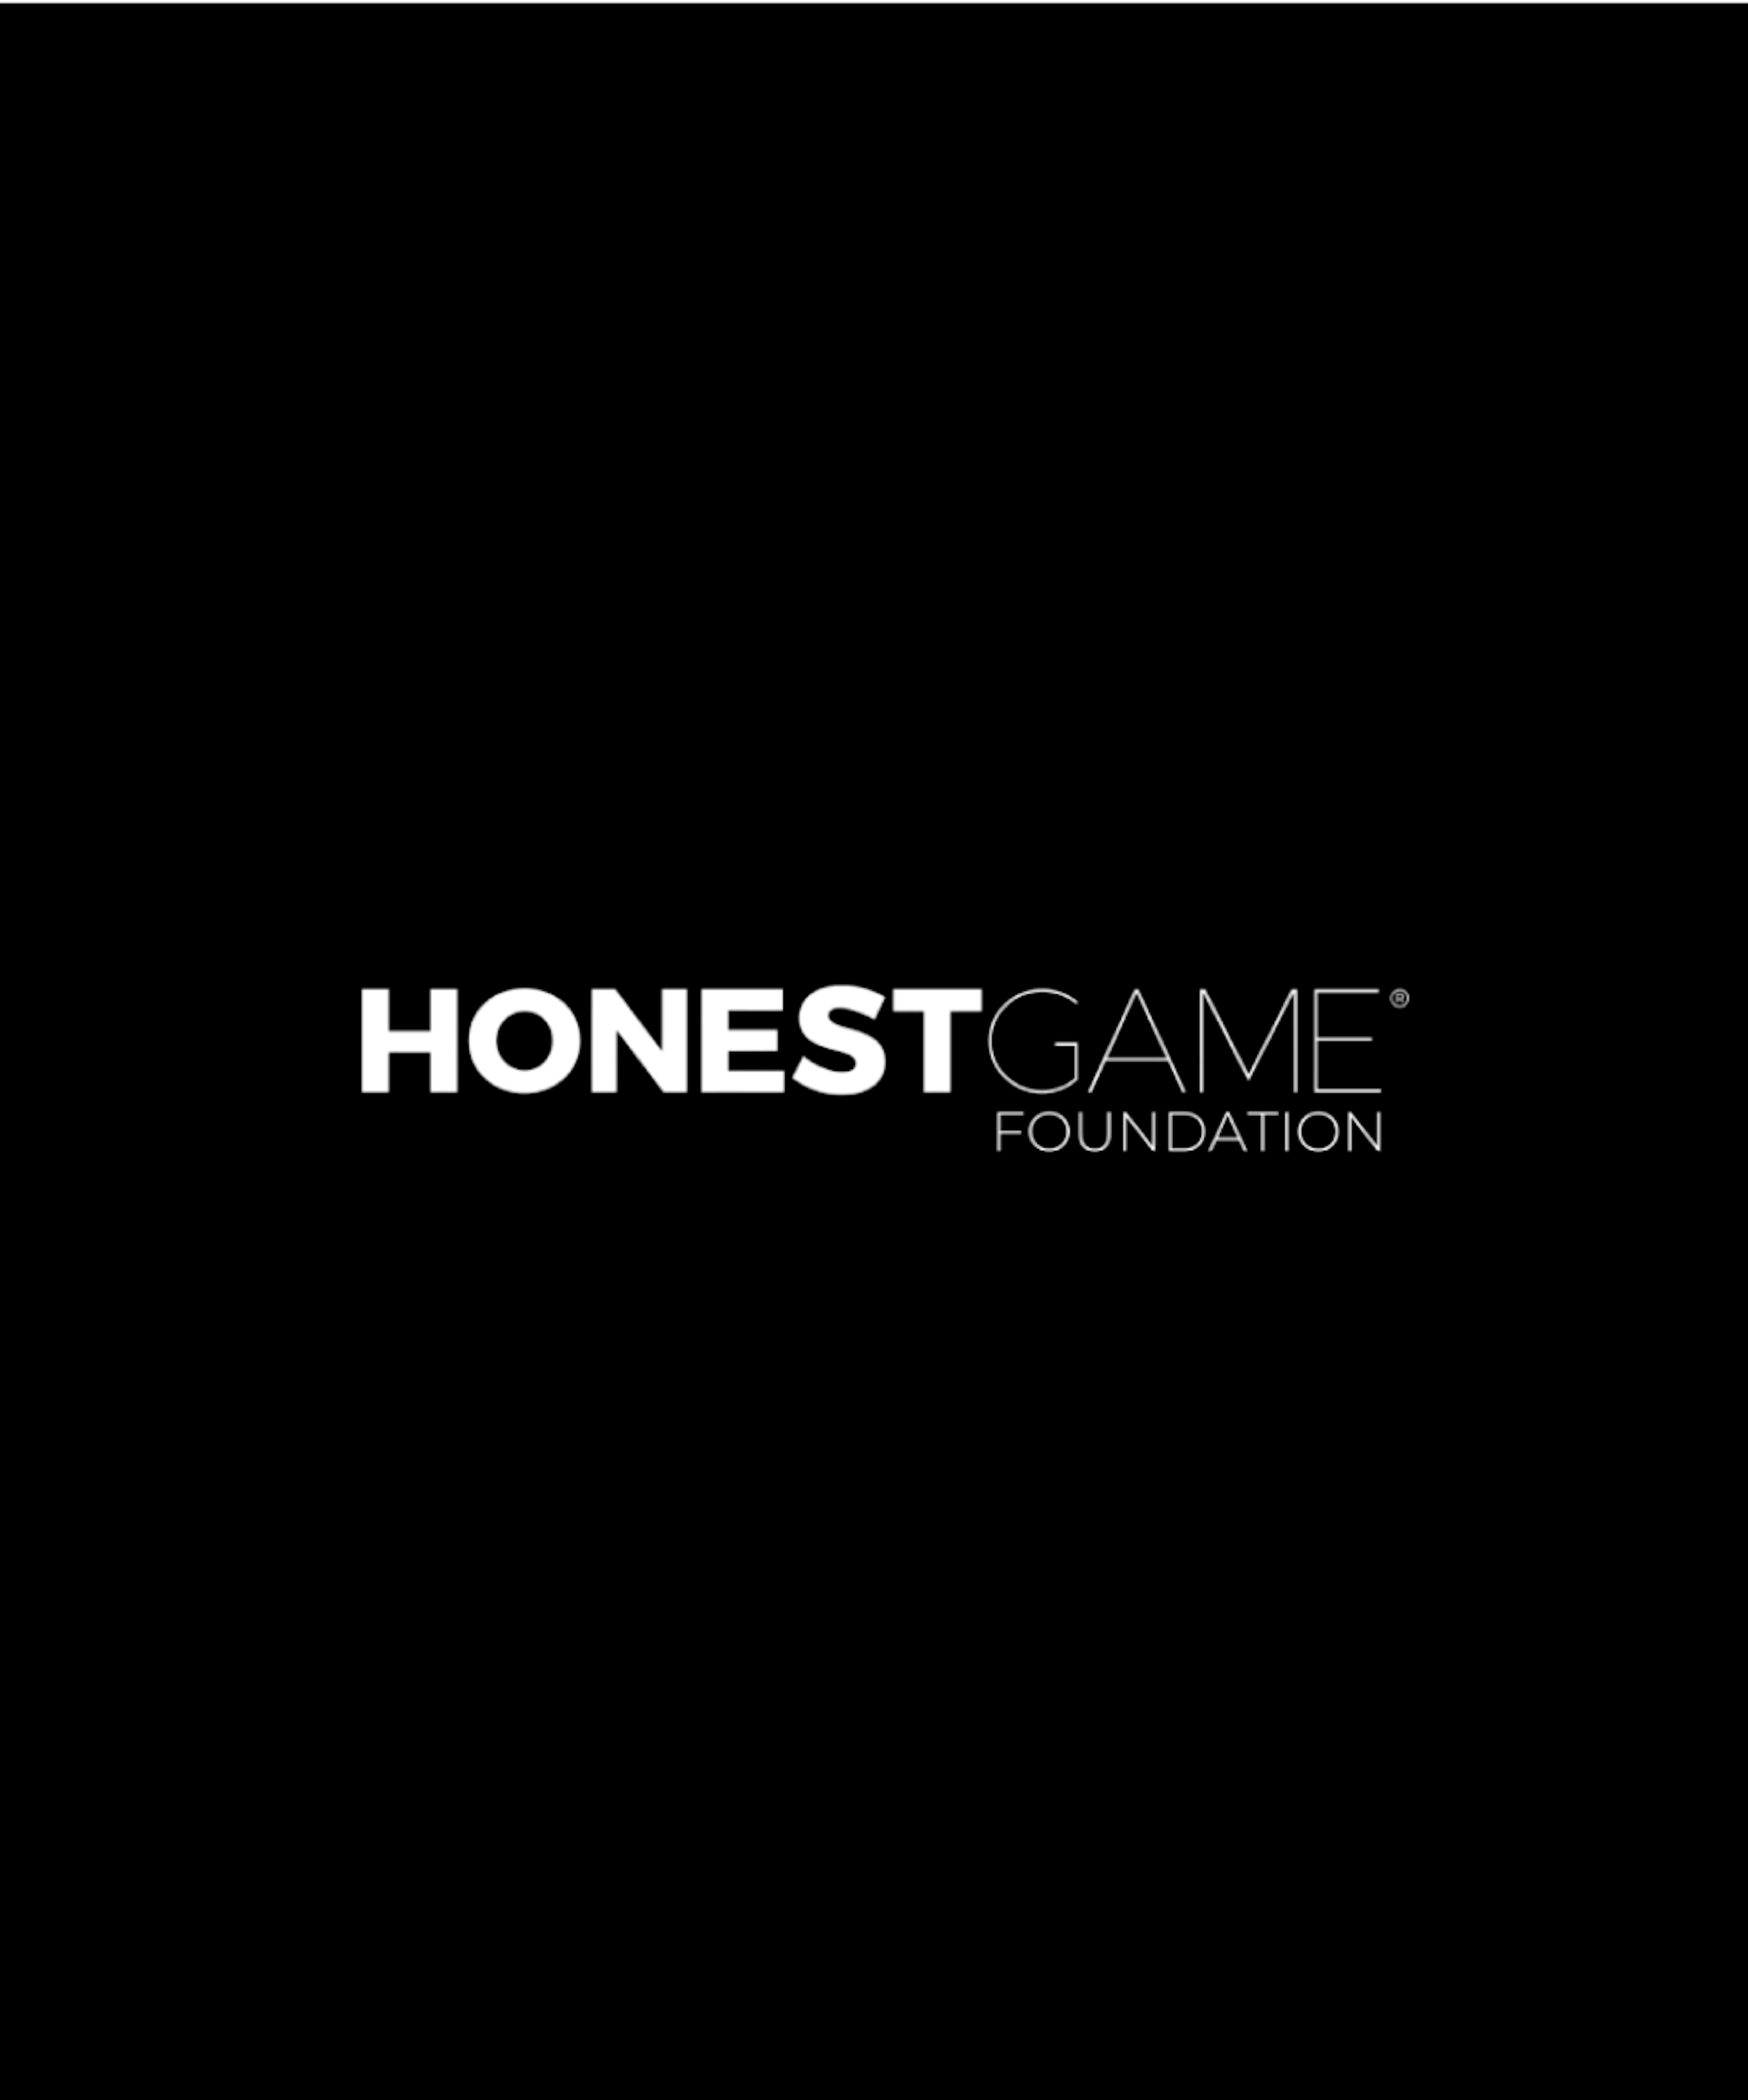 Honest game foundation logo